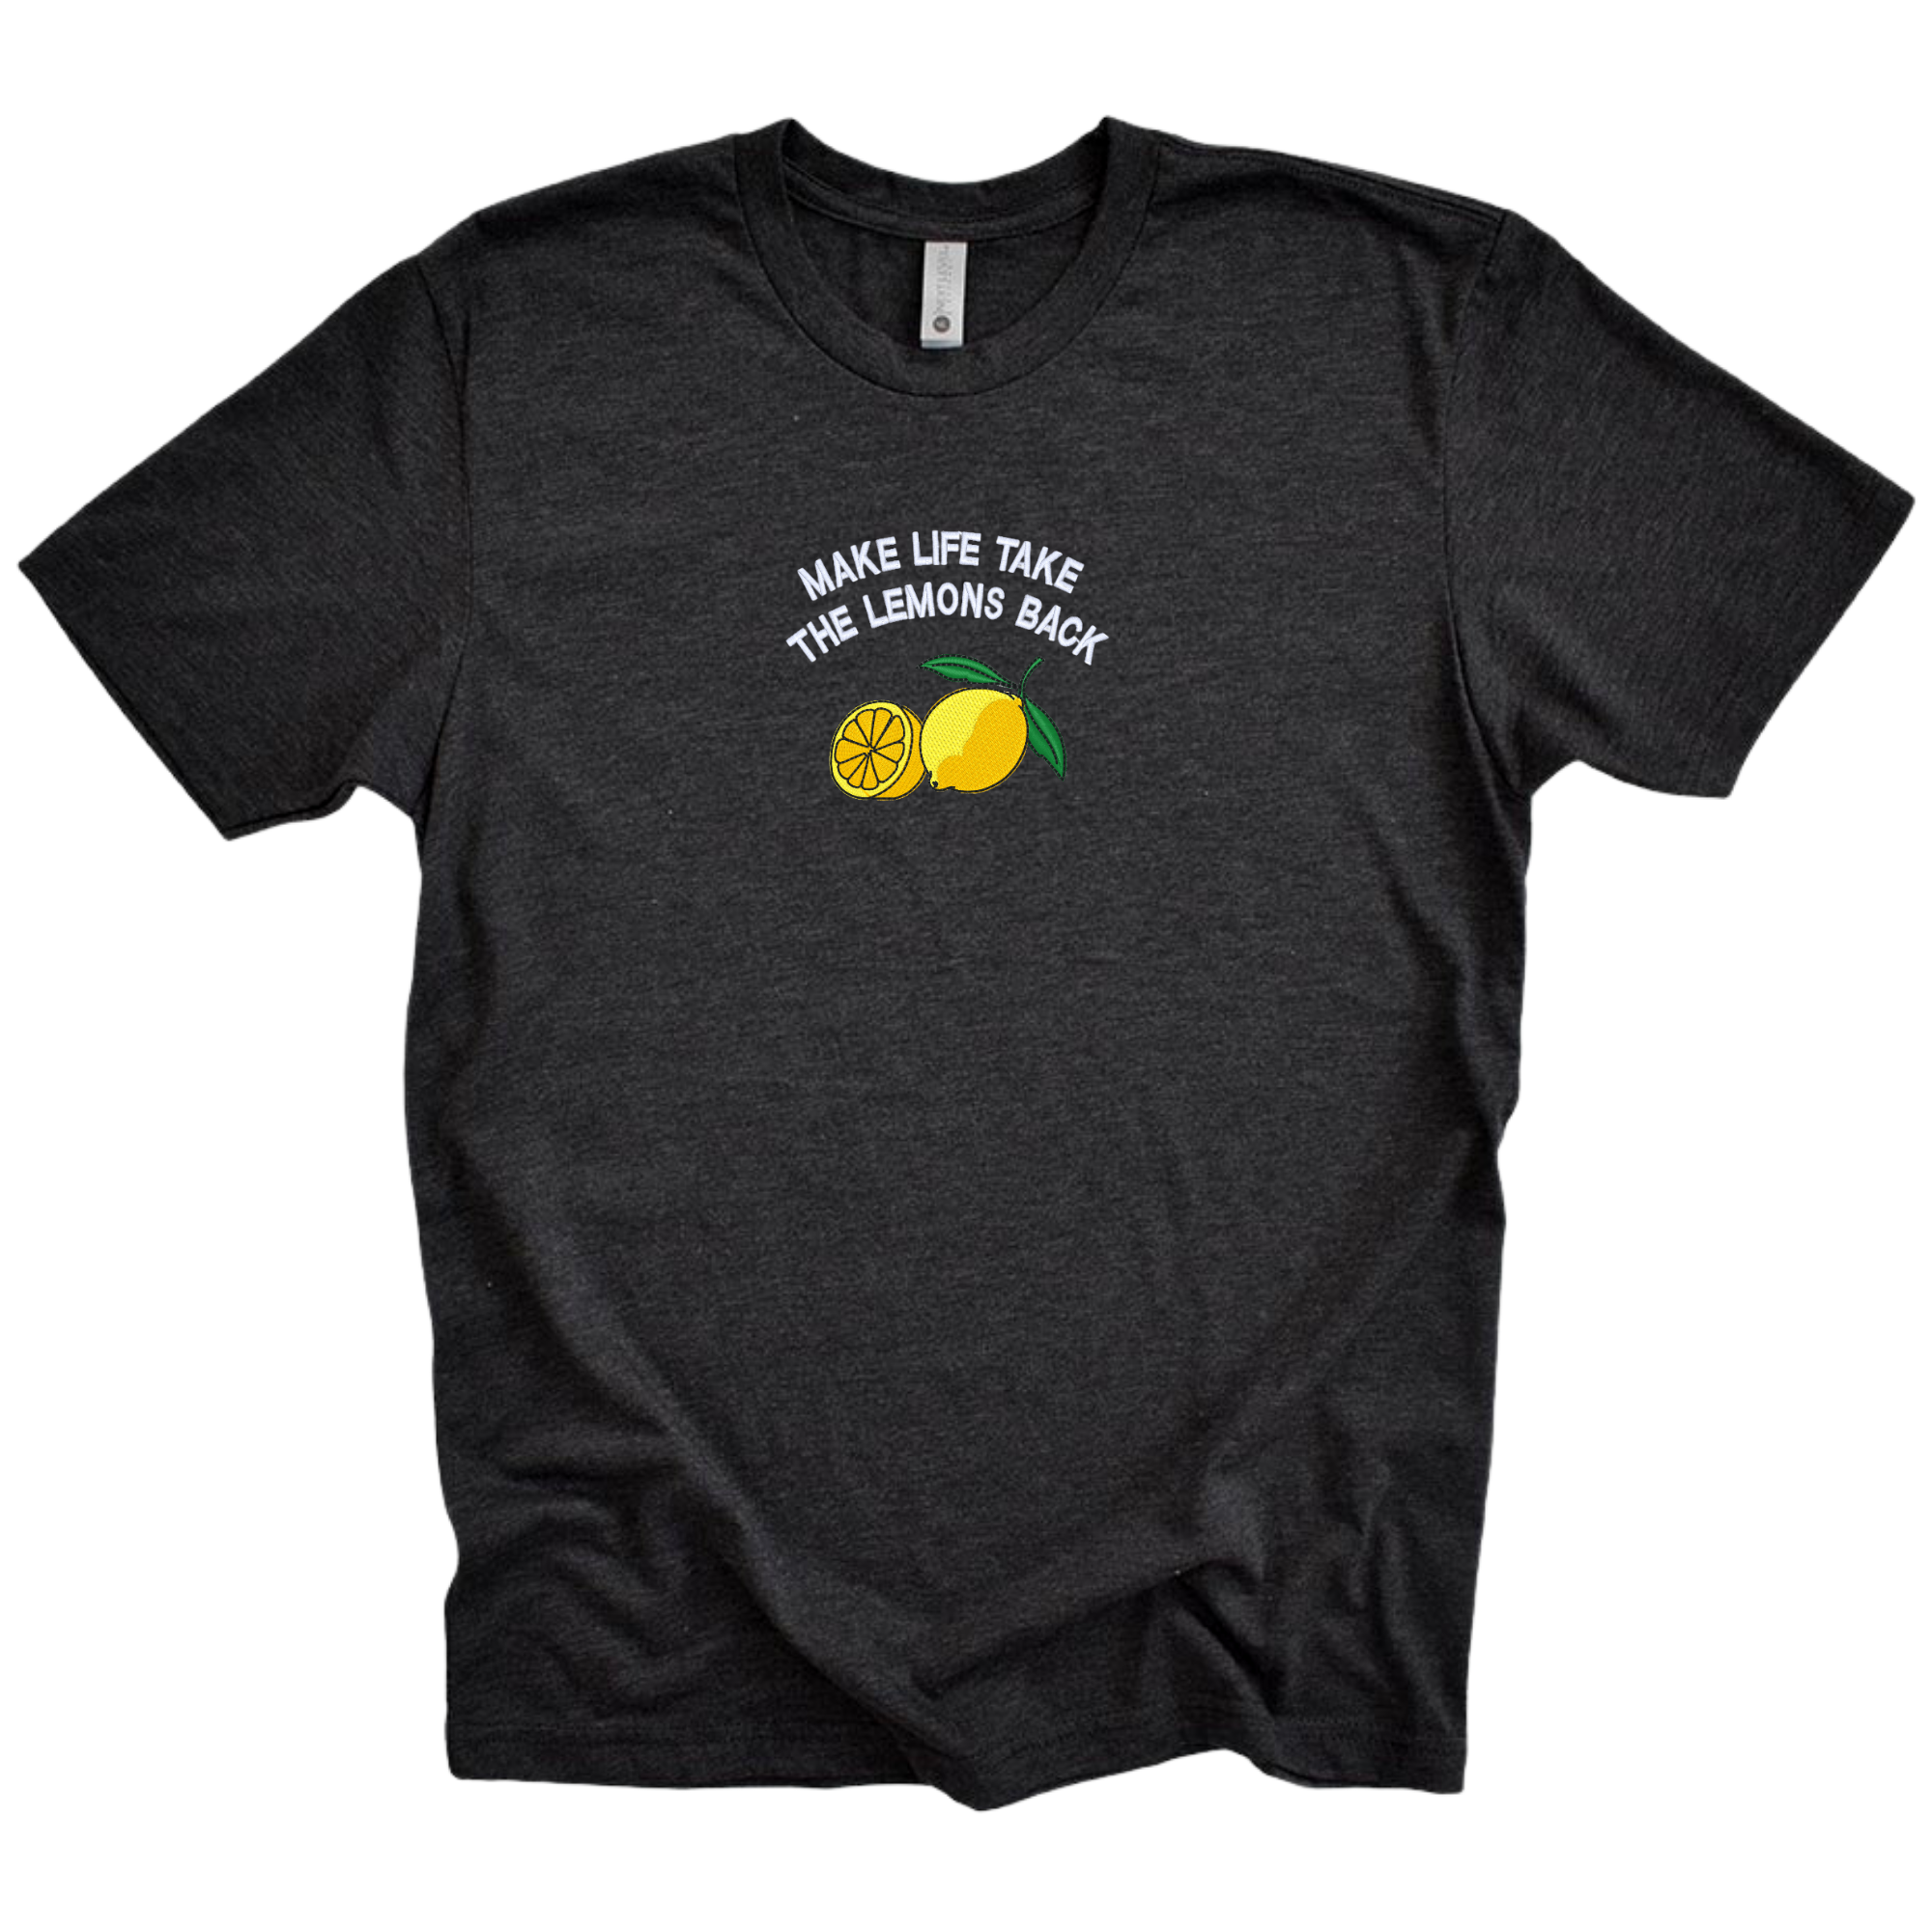 Make Life Take The Lemons Back Embroidered Black Meme Tee Shirt